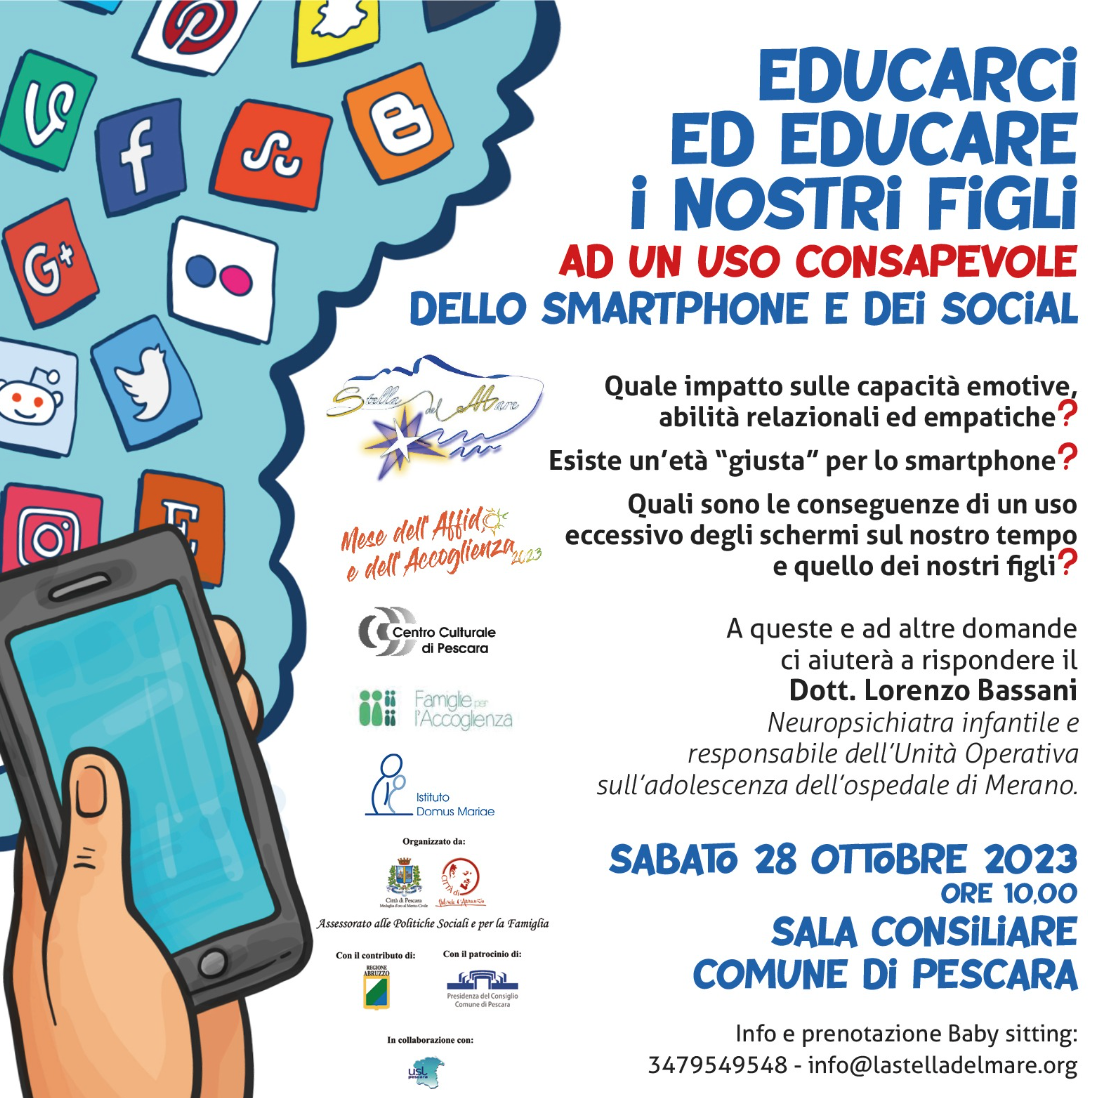 Featured image for “Pescara: Educarci ed educare i nostri figli”